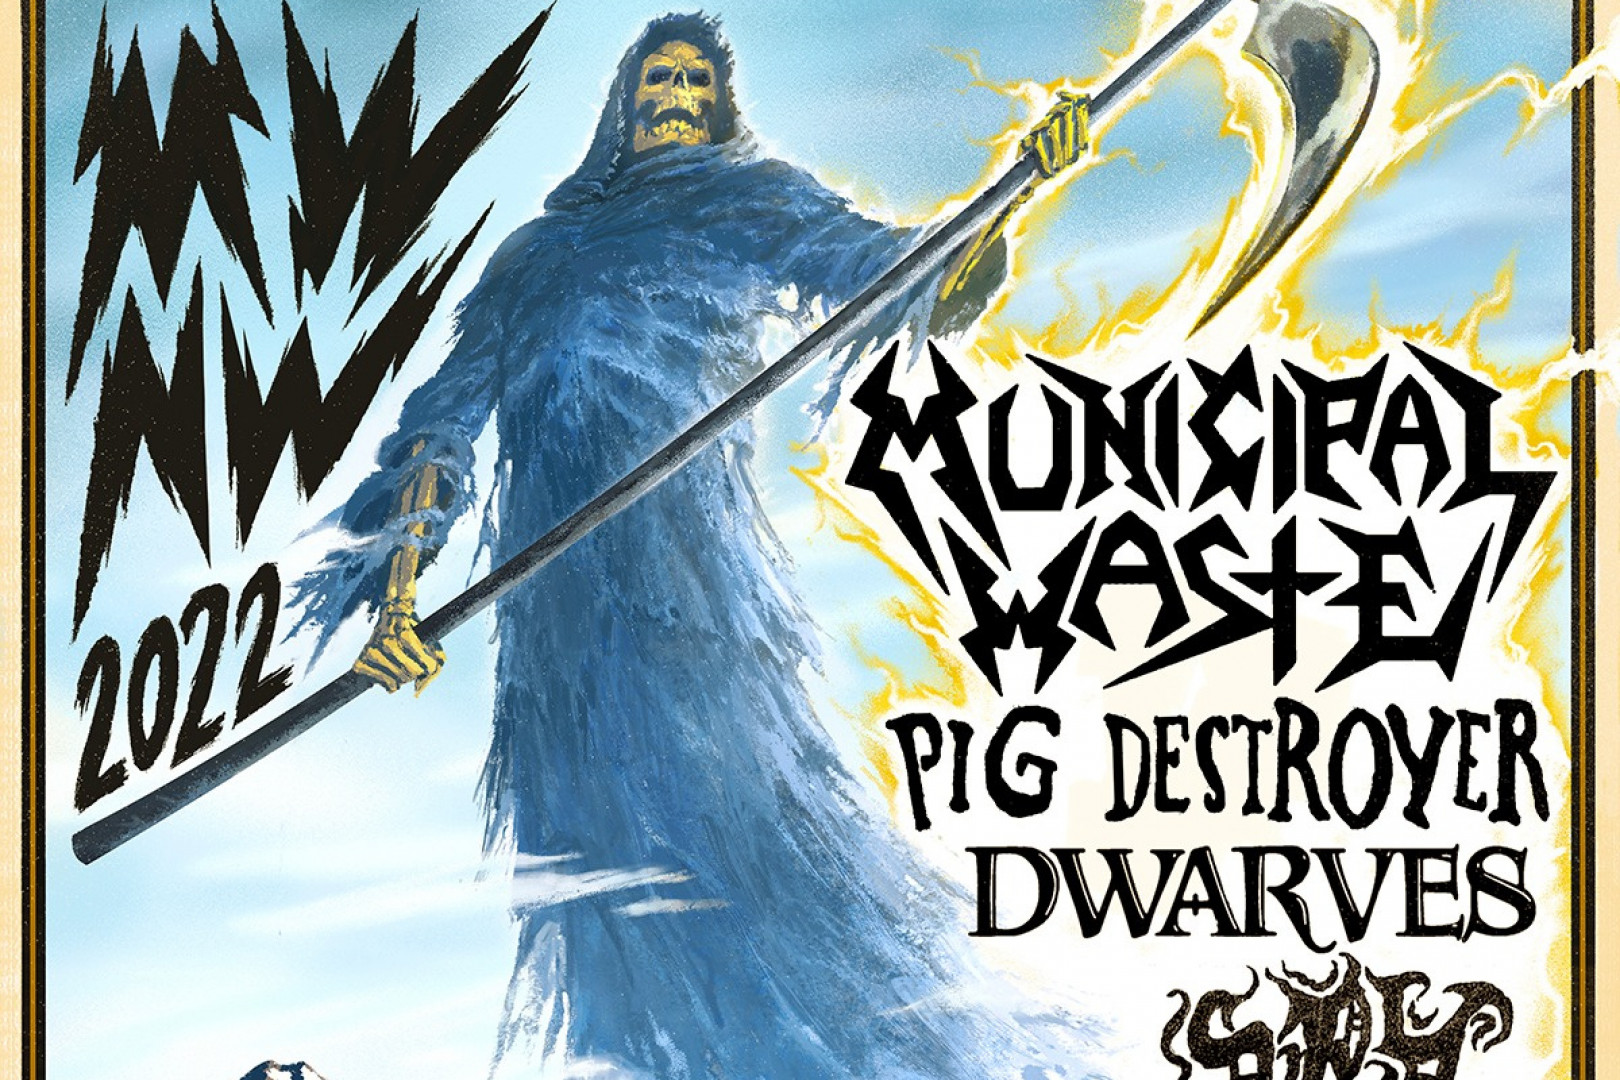 Municipal Waste, Pig Destroyer, Dwarves, Spy to tour in May